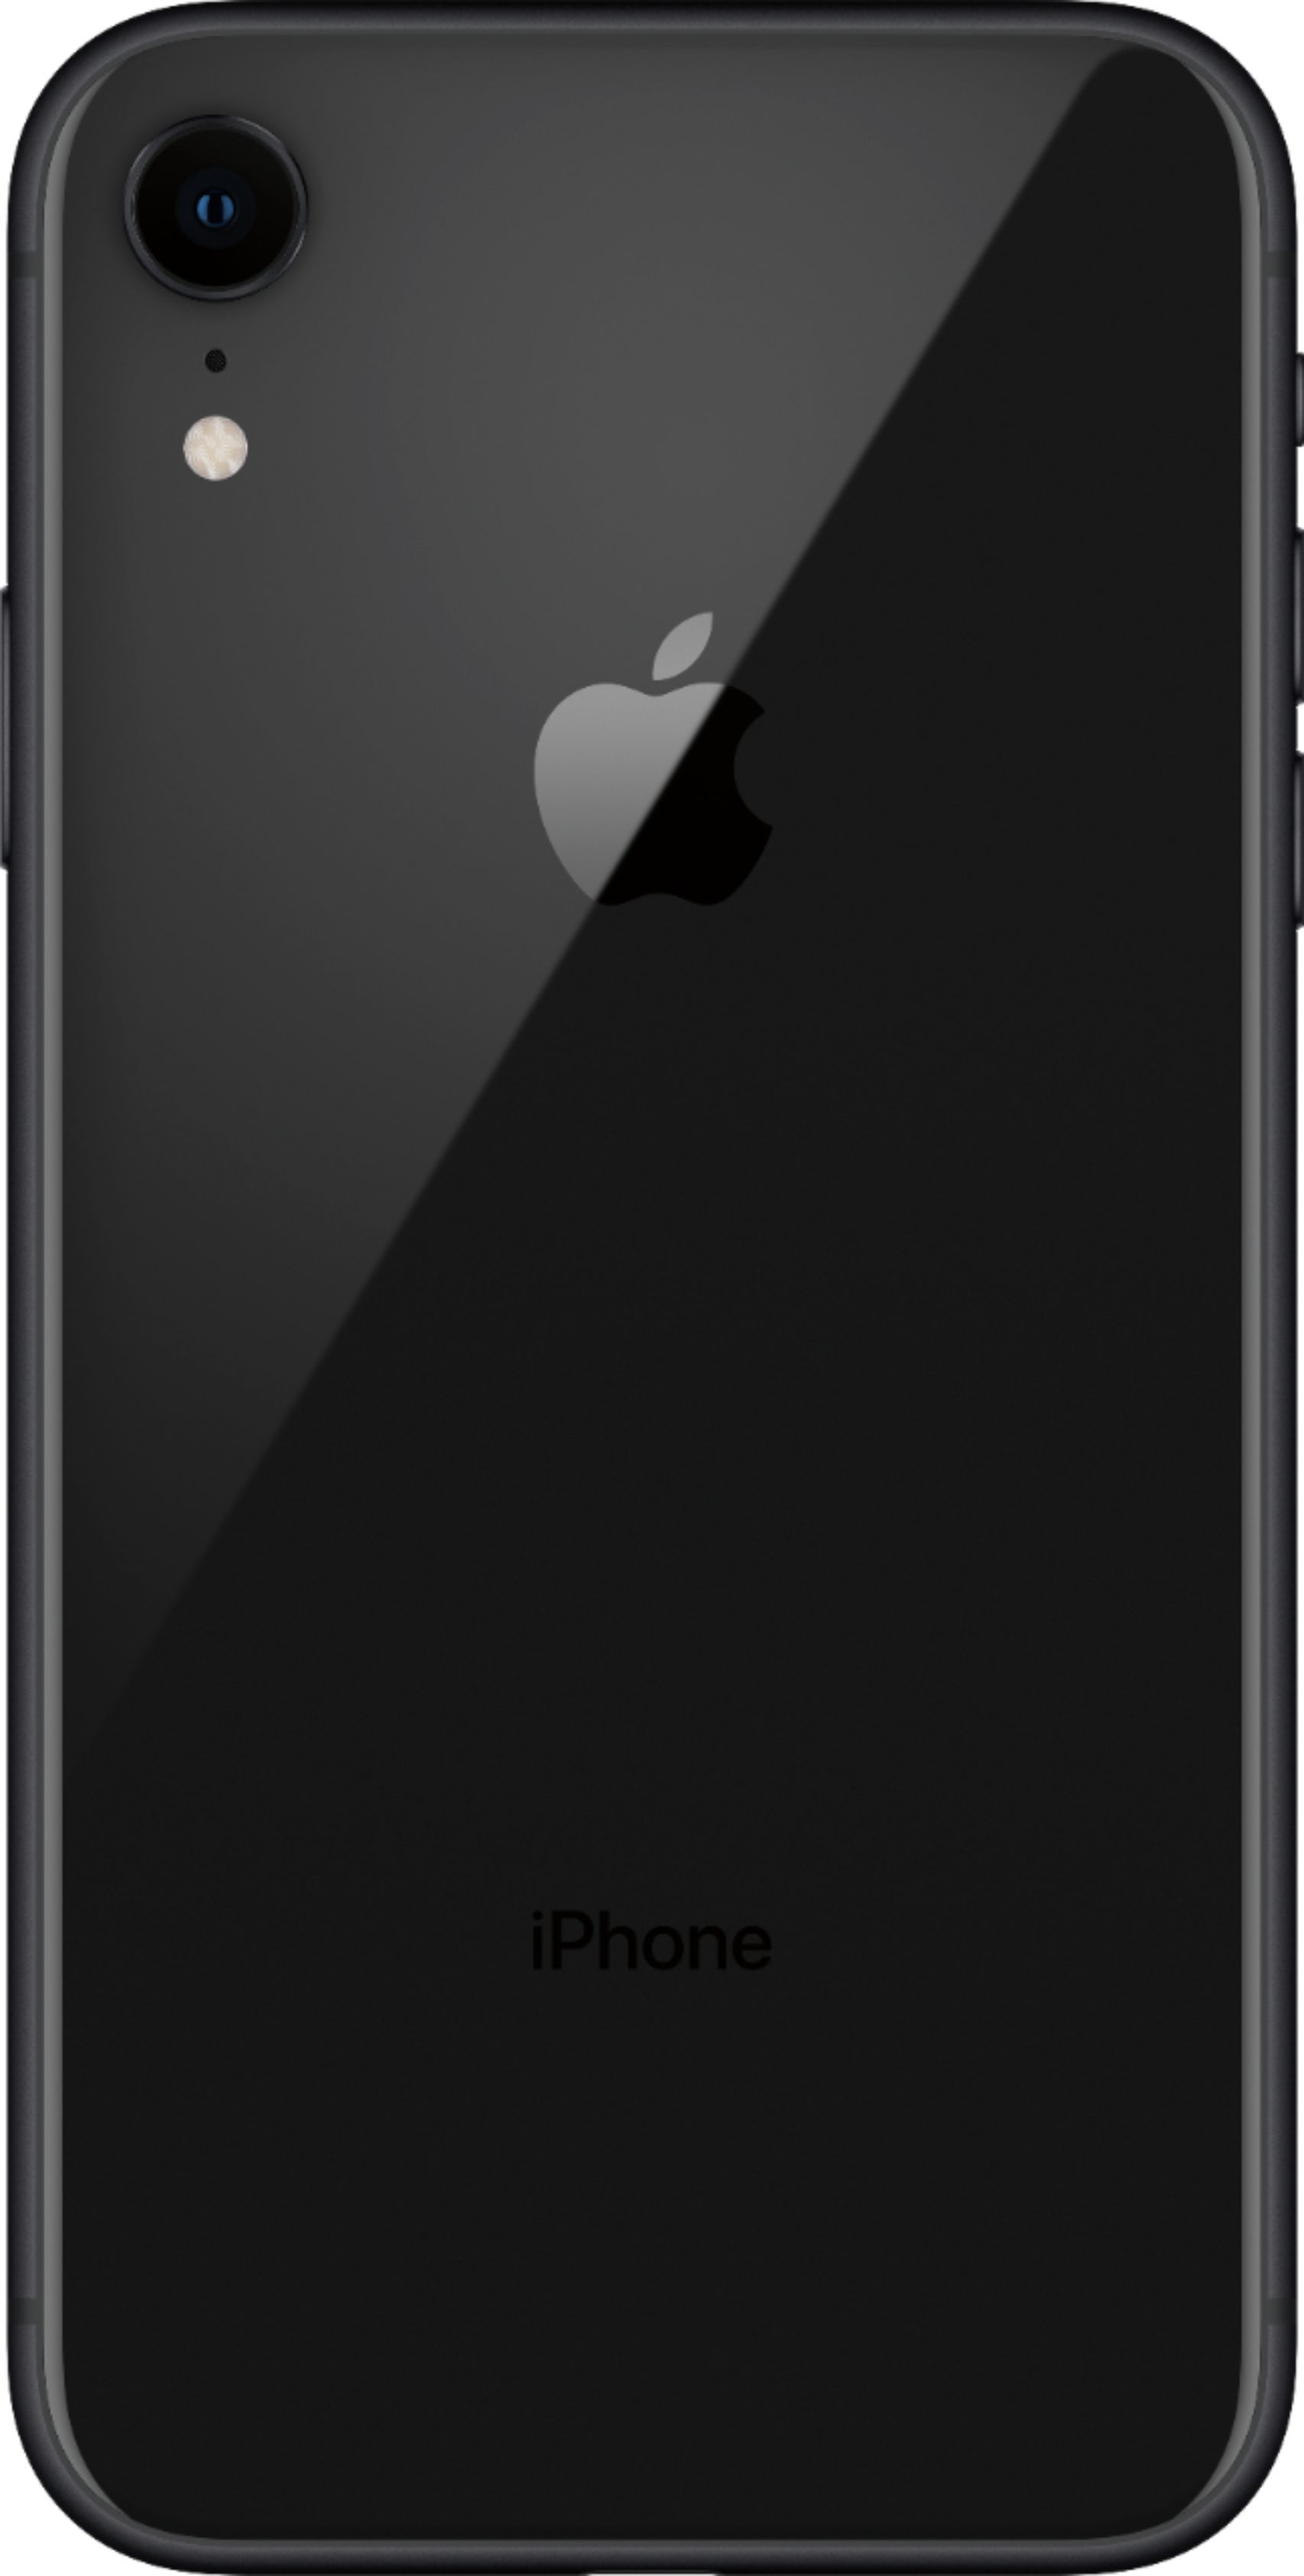 Apple iPhone XR 64GB Black (Verizon) MH6F3LL/A - Best Buy